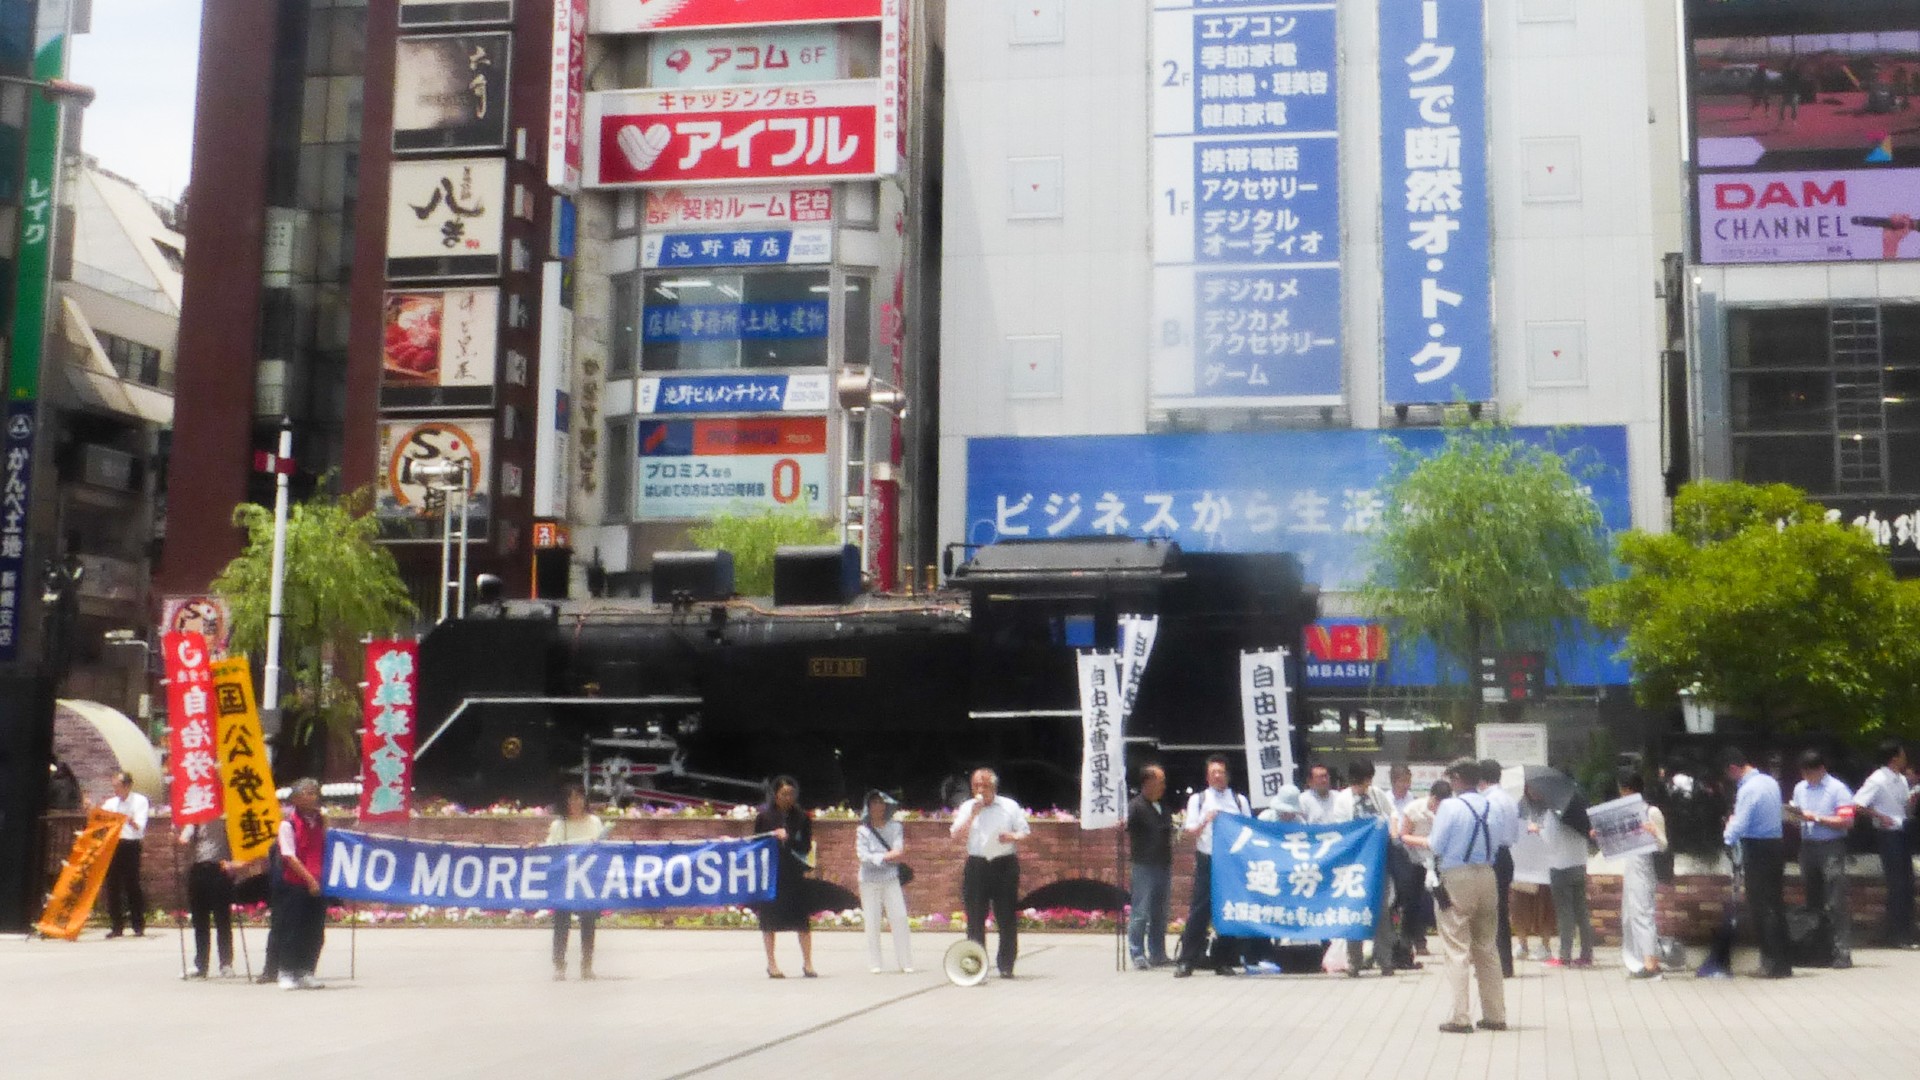 A 2018 karoshi protest in Tokyo.